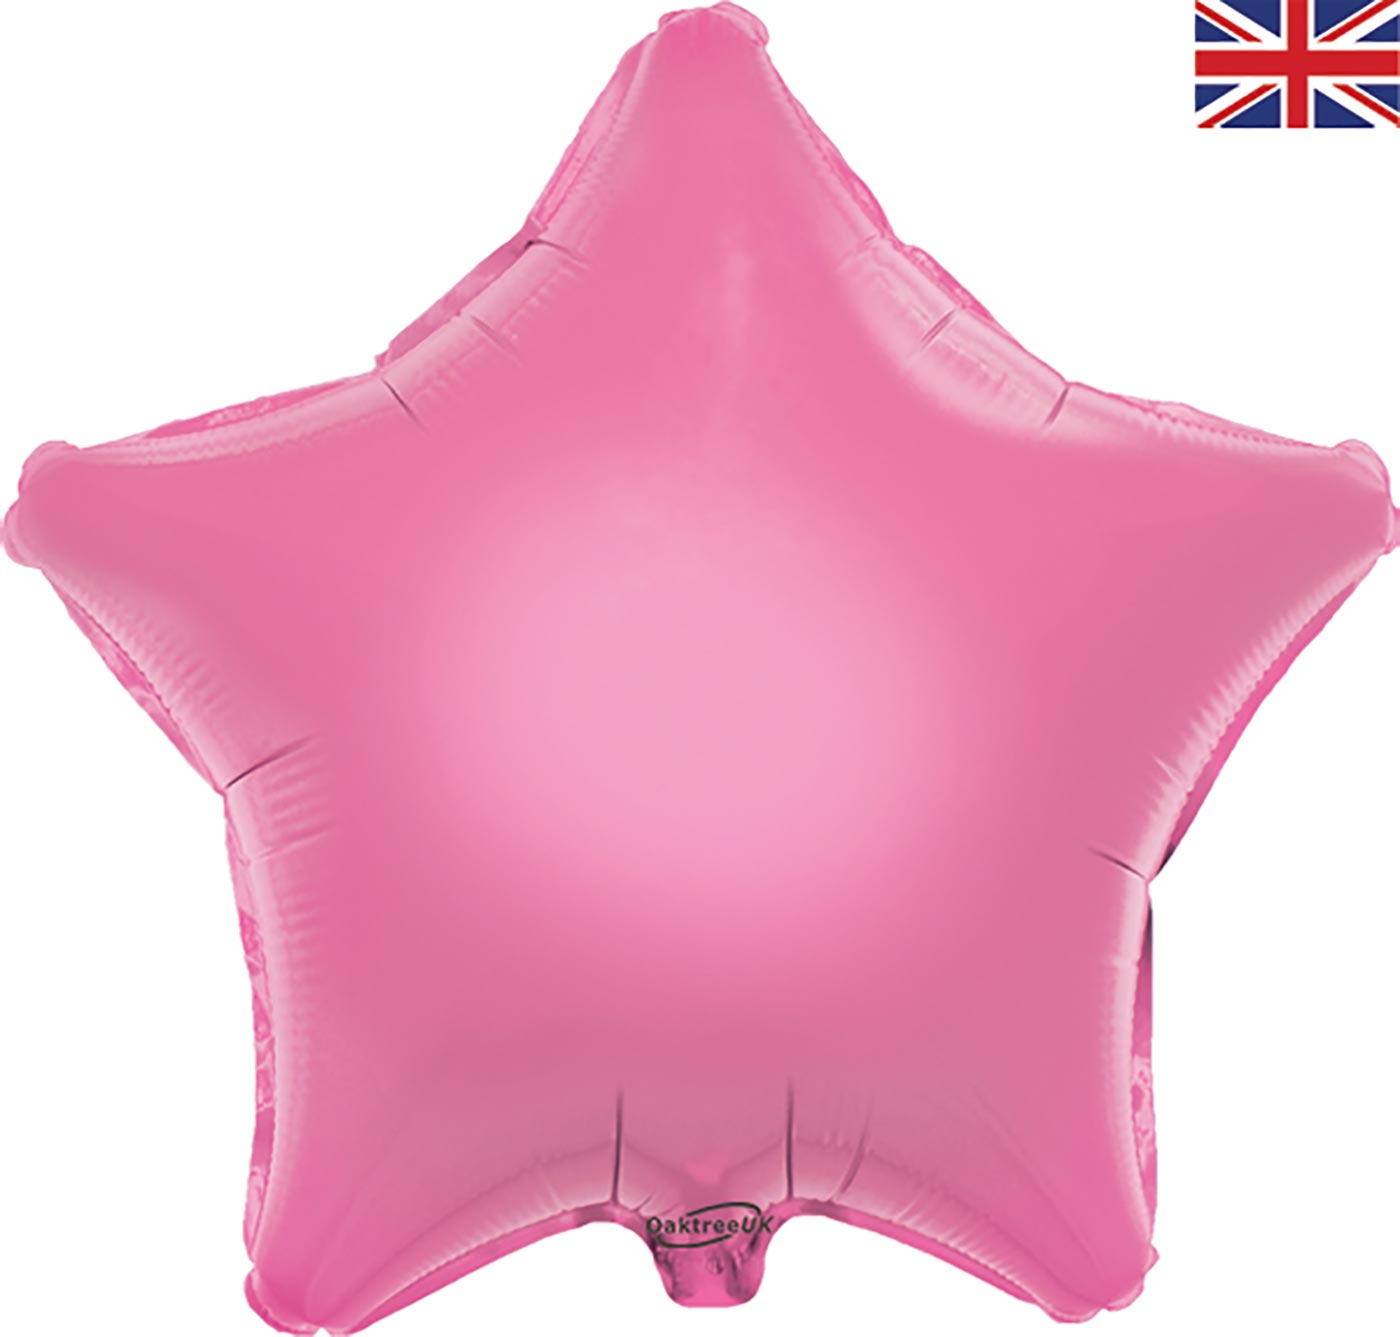 Pink Star Balloon